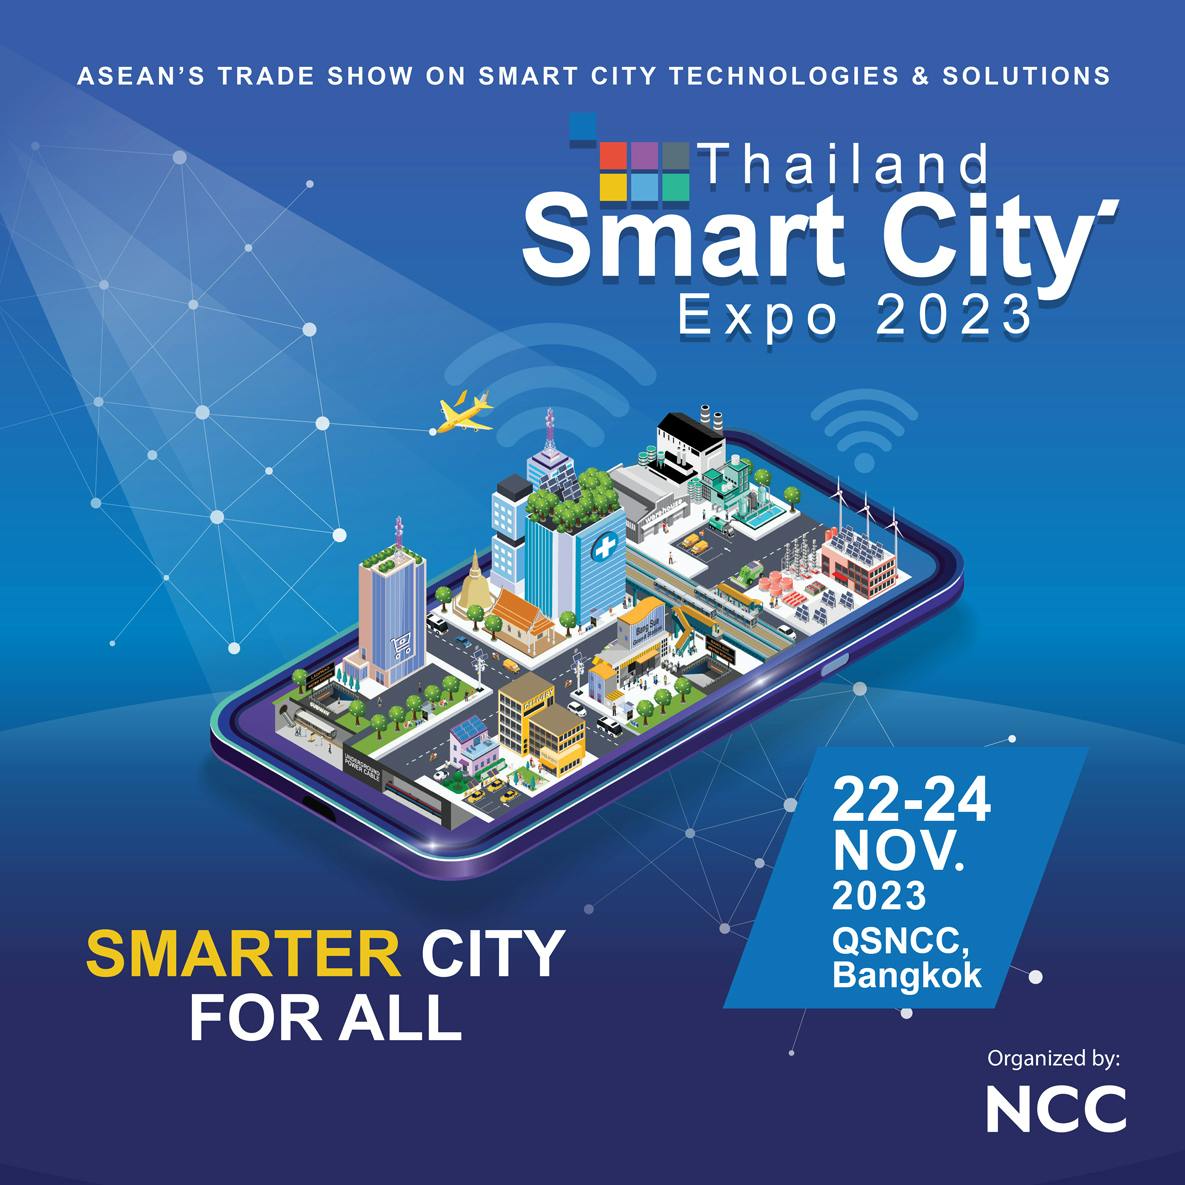 Thailand Smart City Expo 2023